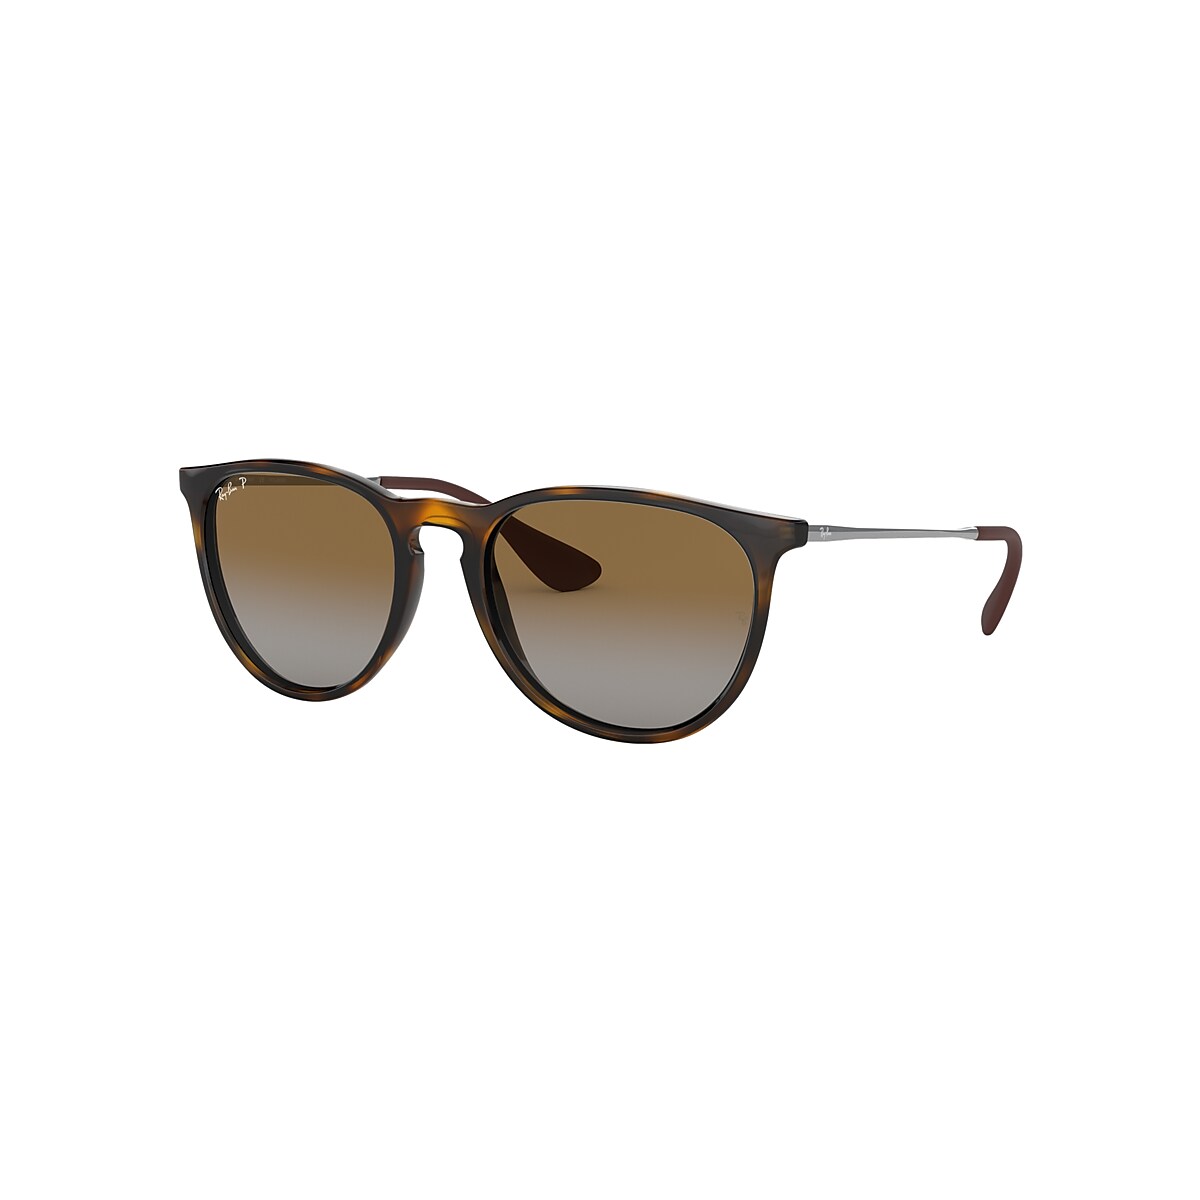 ERIKA CLASSIC Sunglasses in Light Havana Brown - RB4171 | Ray-Ban®